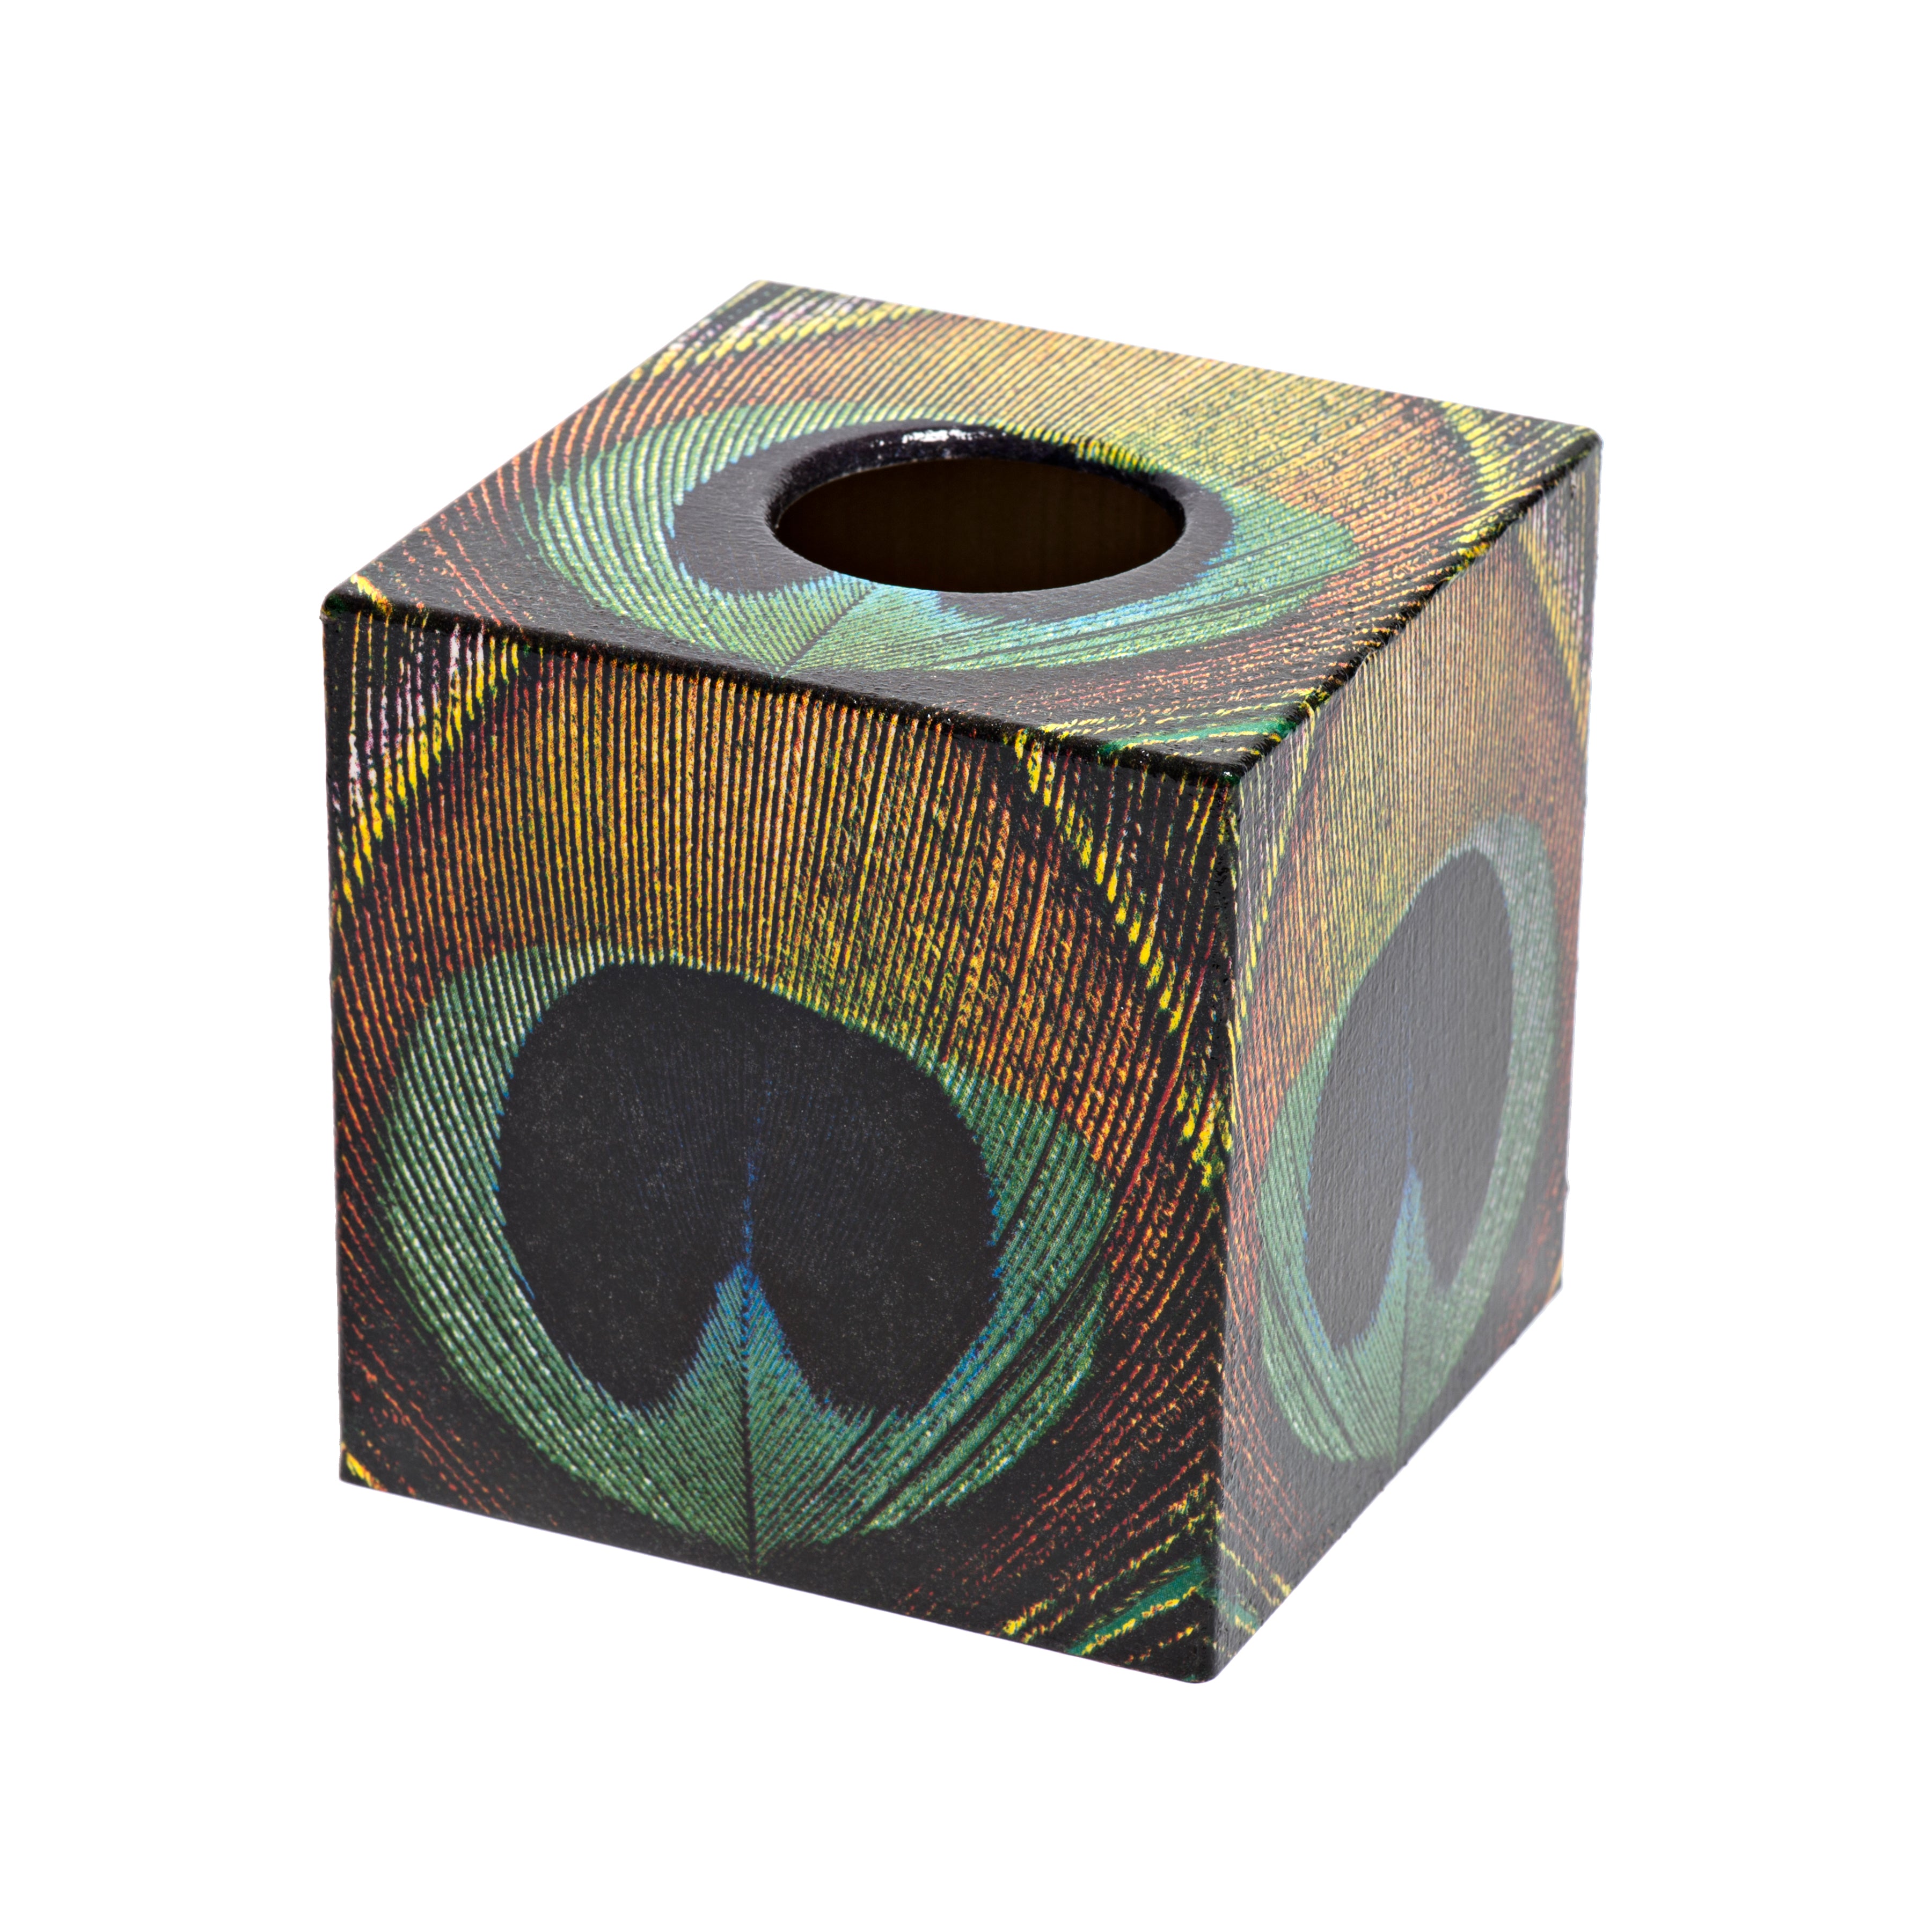 Trinket Box wooden Peacock Design